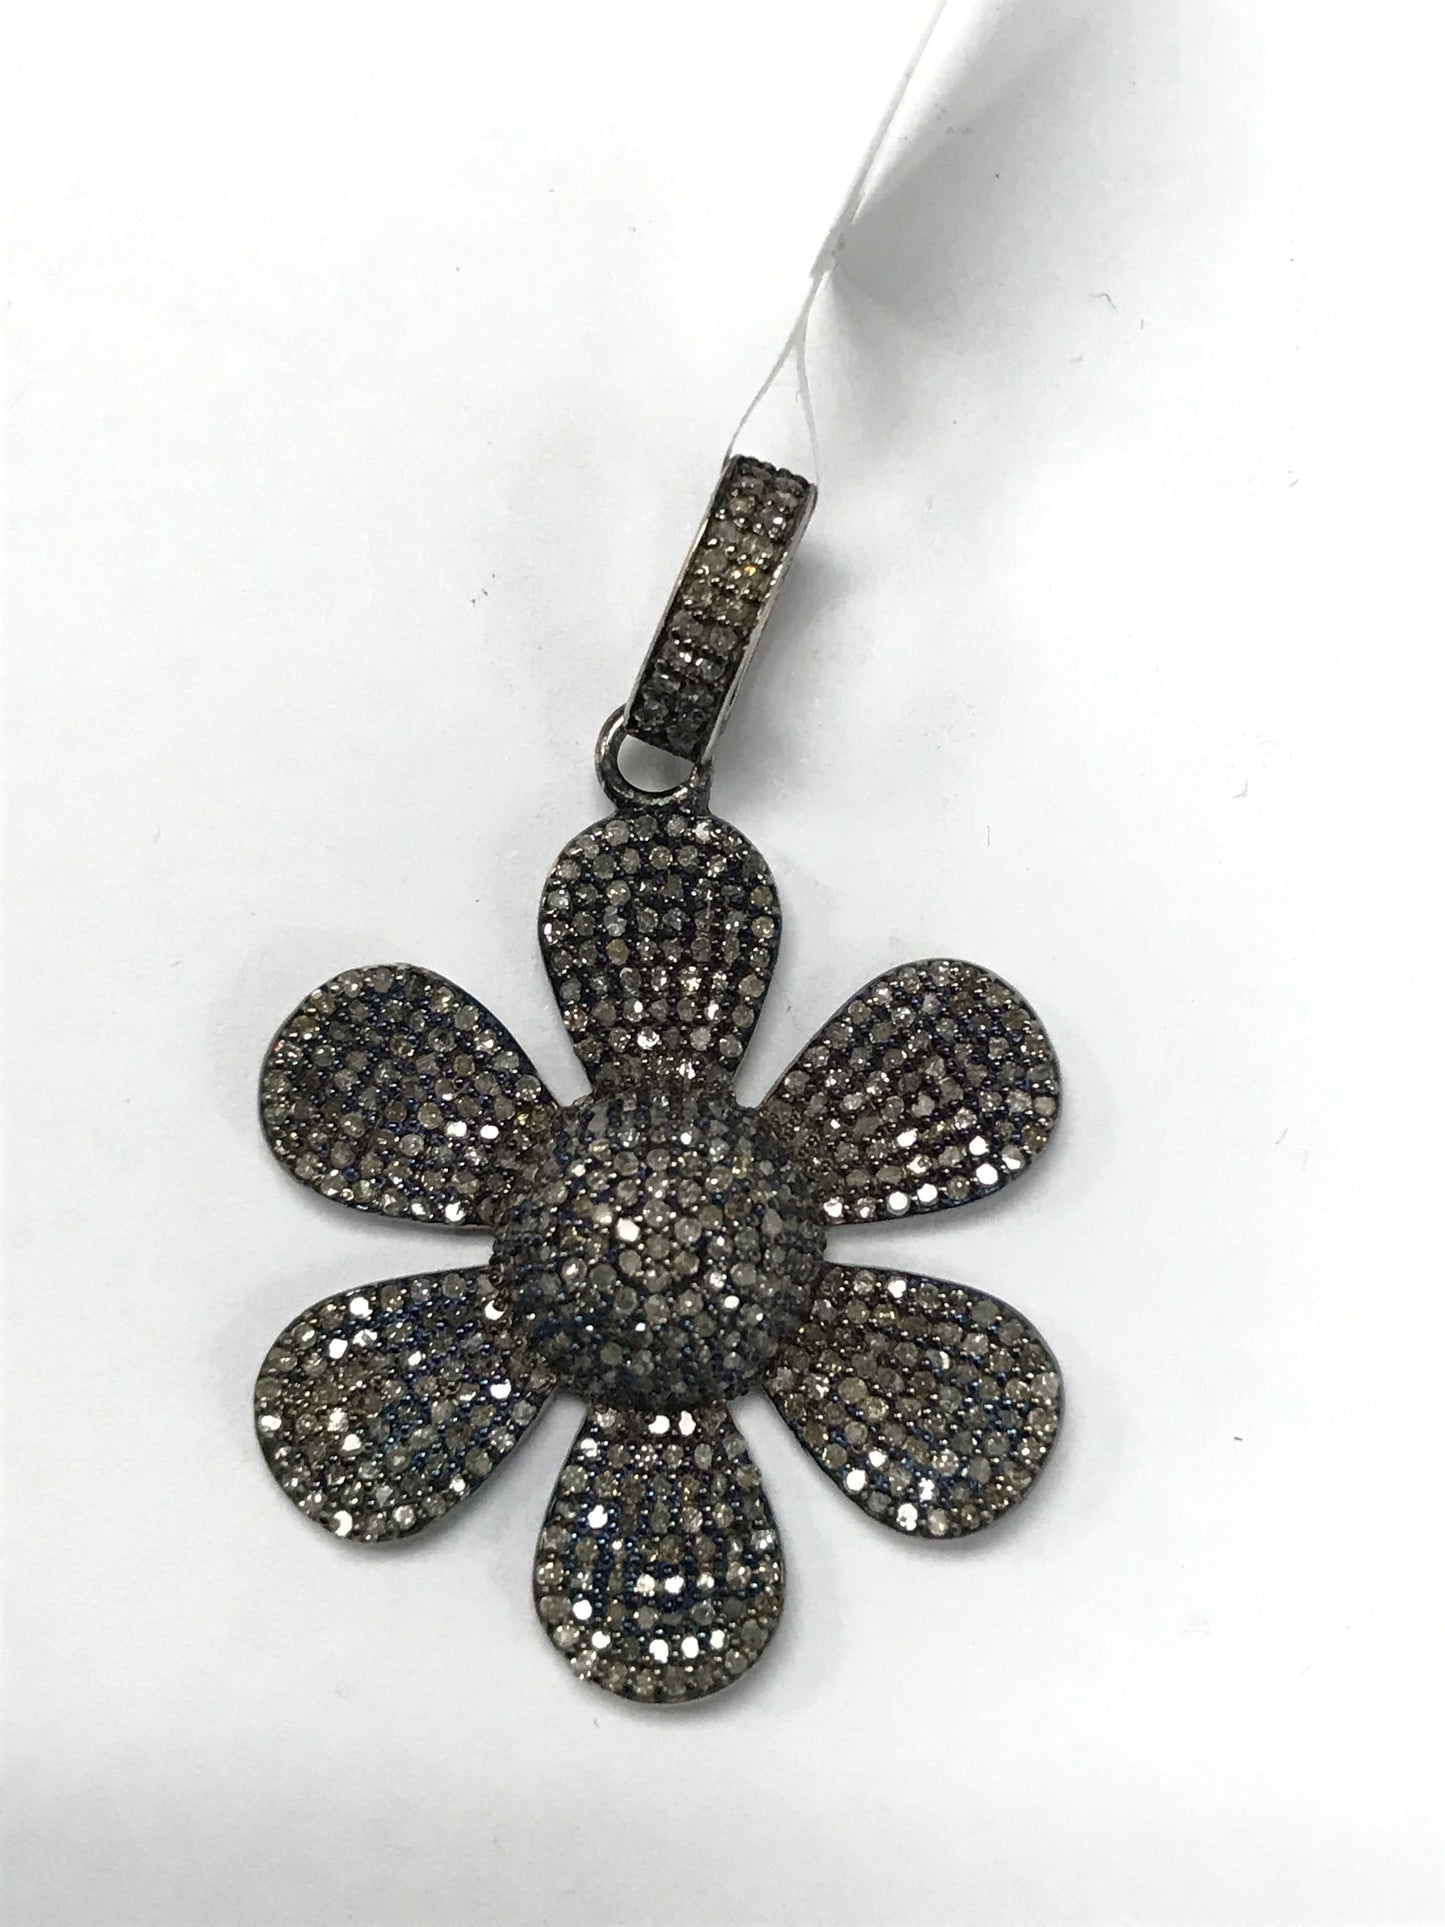 Diamond Flower Pendant, Pave Diamond Pendant,Pave Flower Necklace, Appx 40 x 30mm. Sterling Silver